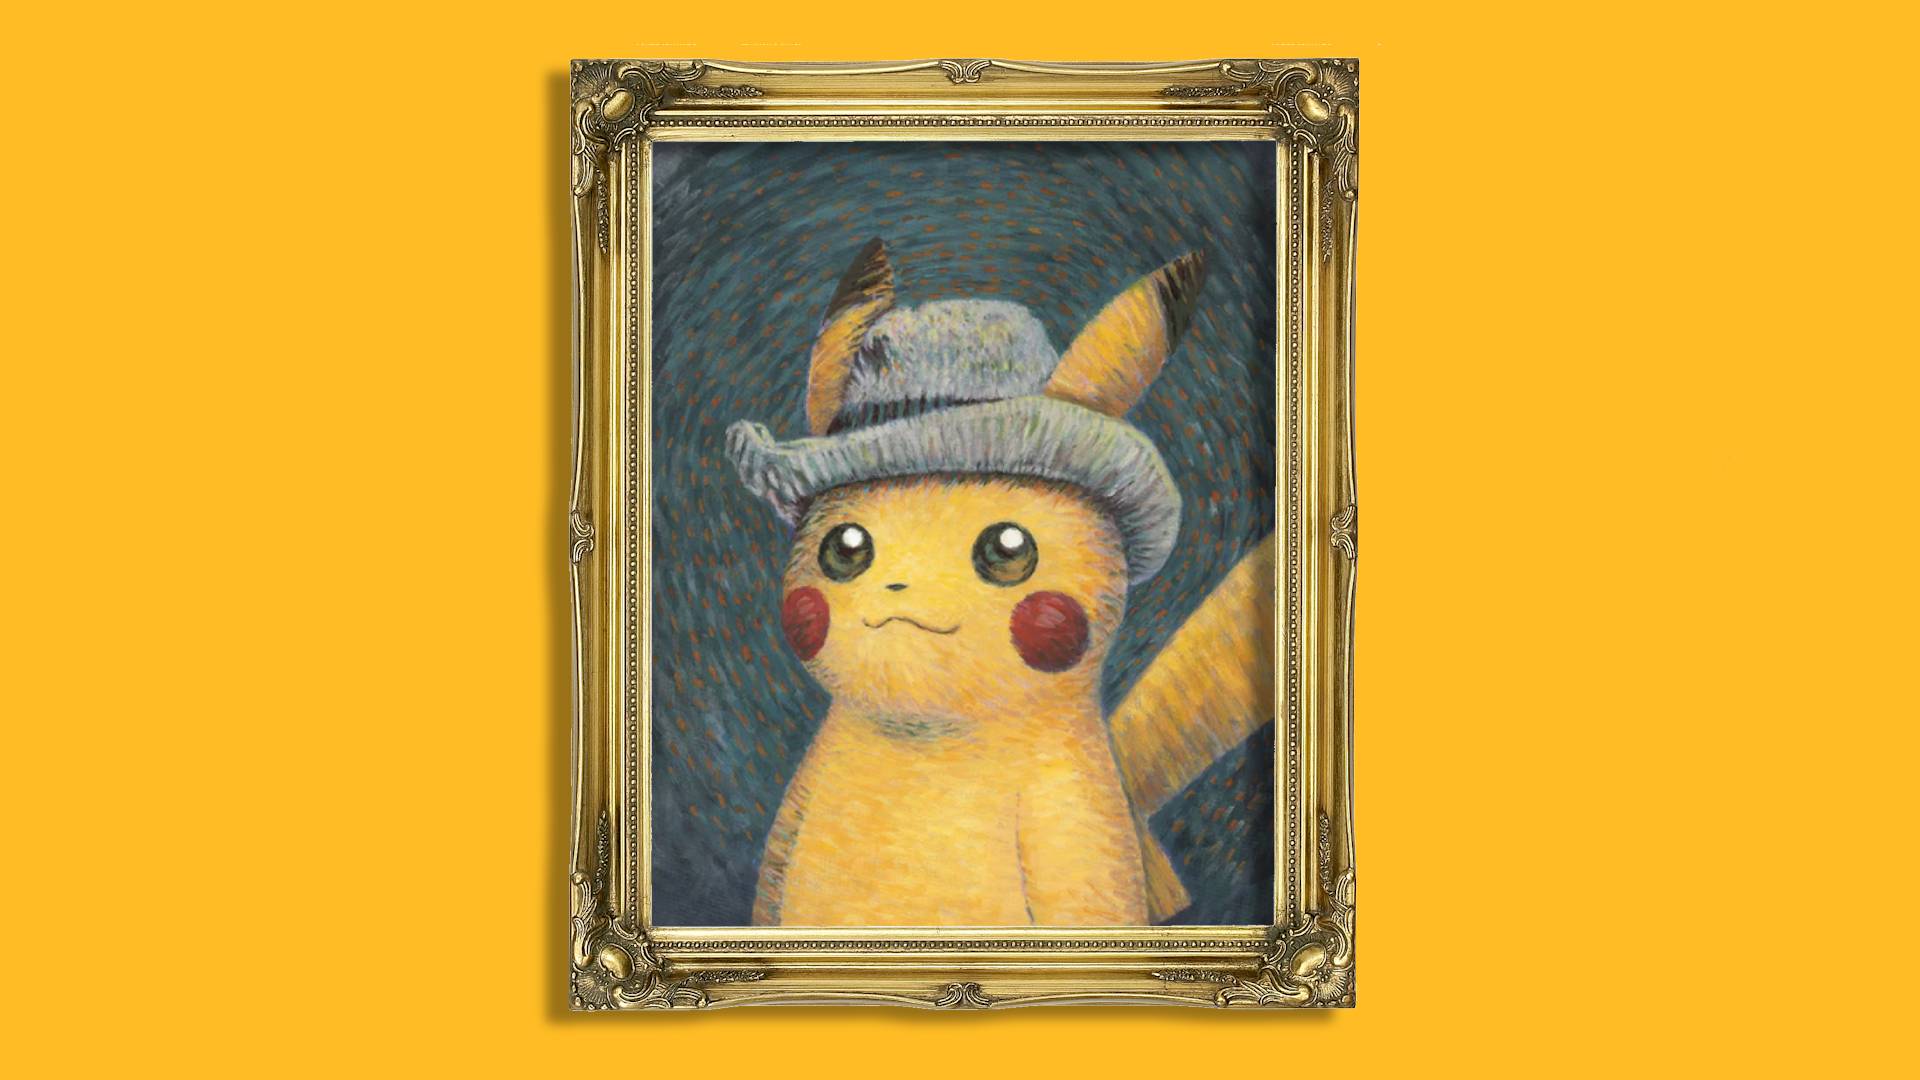 This Pokémon x Van Gogh Pikachu TCG promo card is perfect